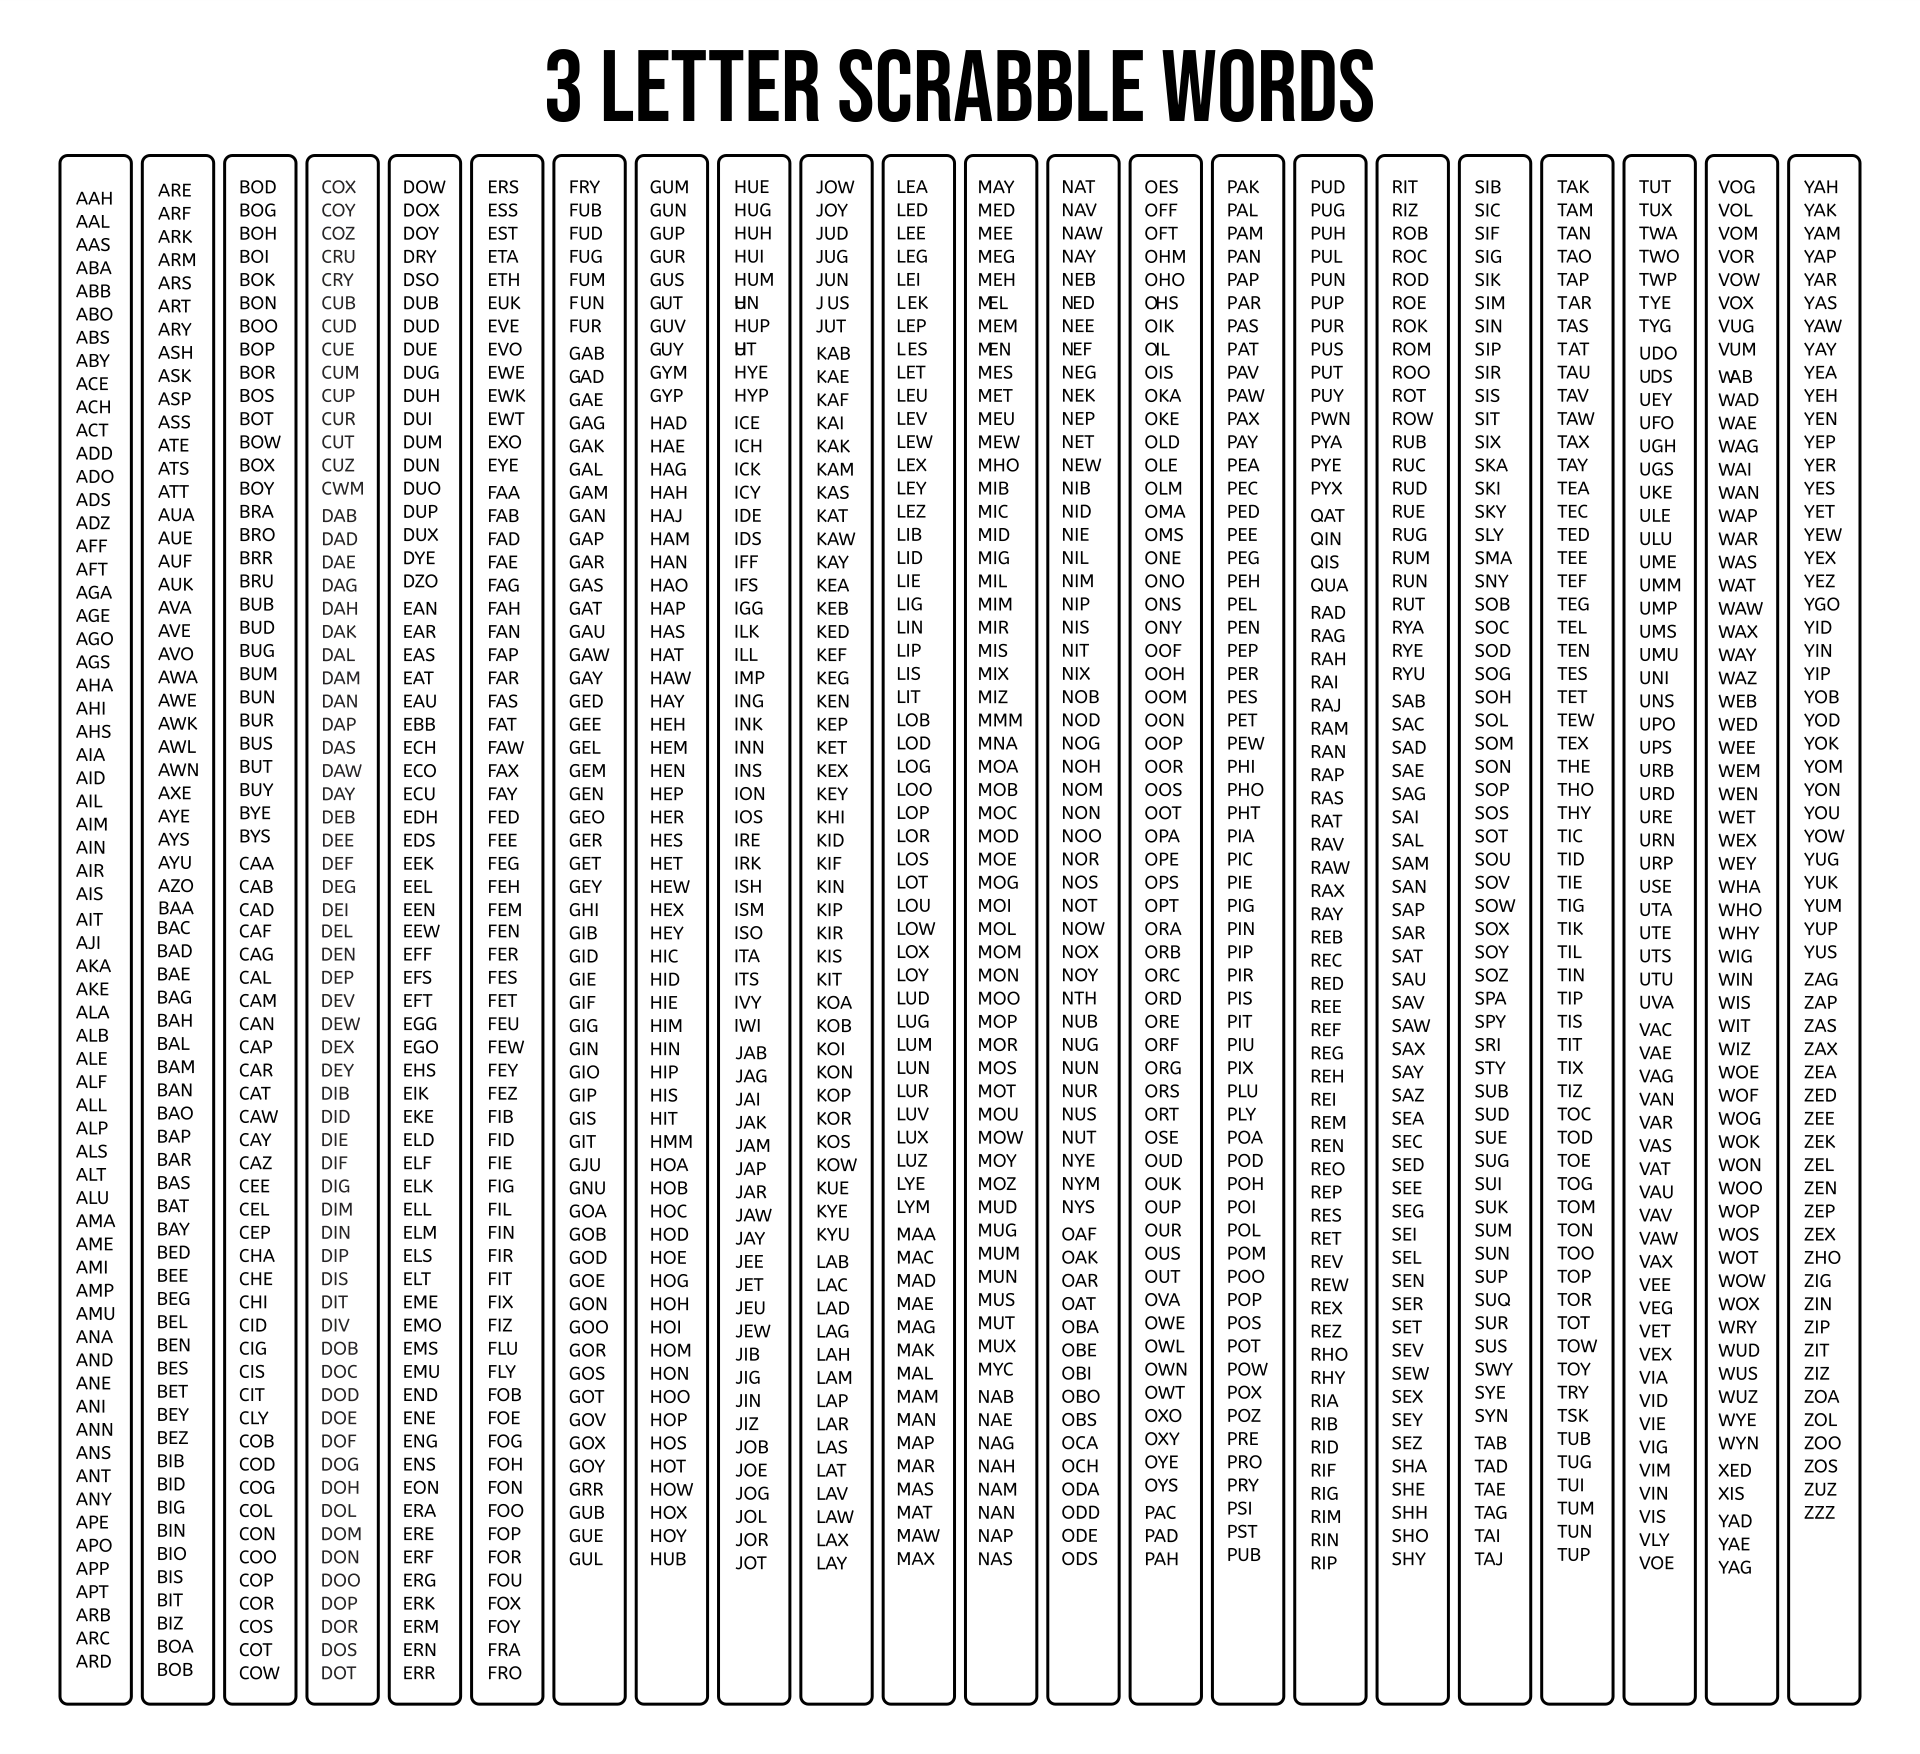 3 Letter Scrabble Words